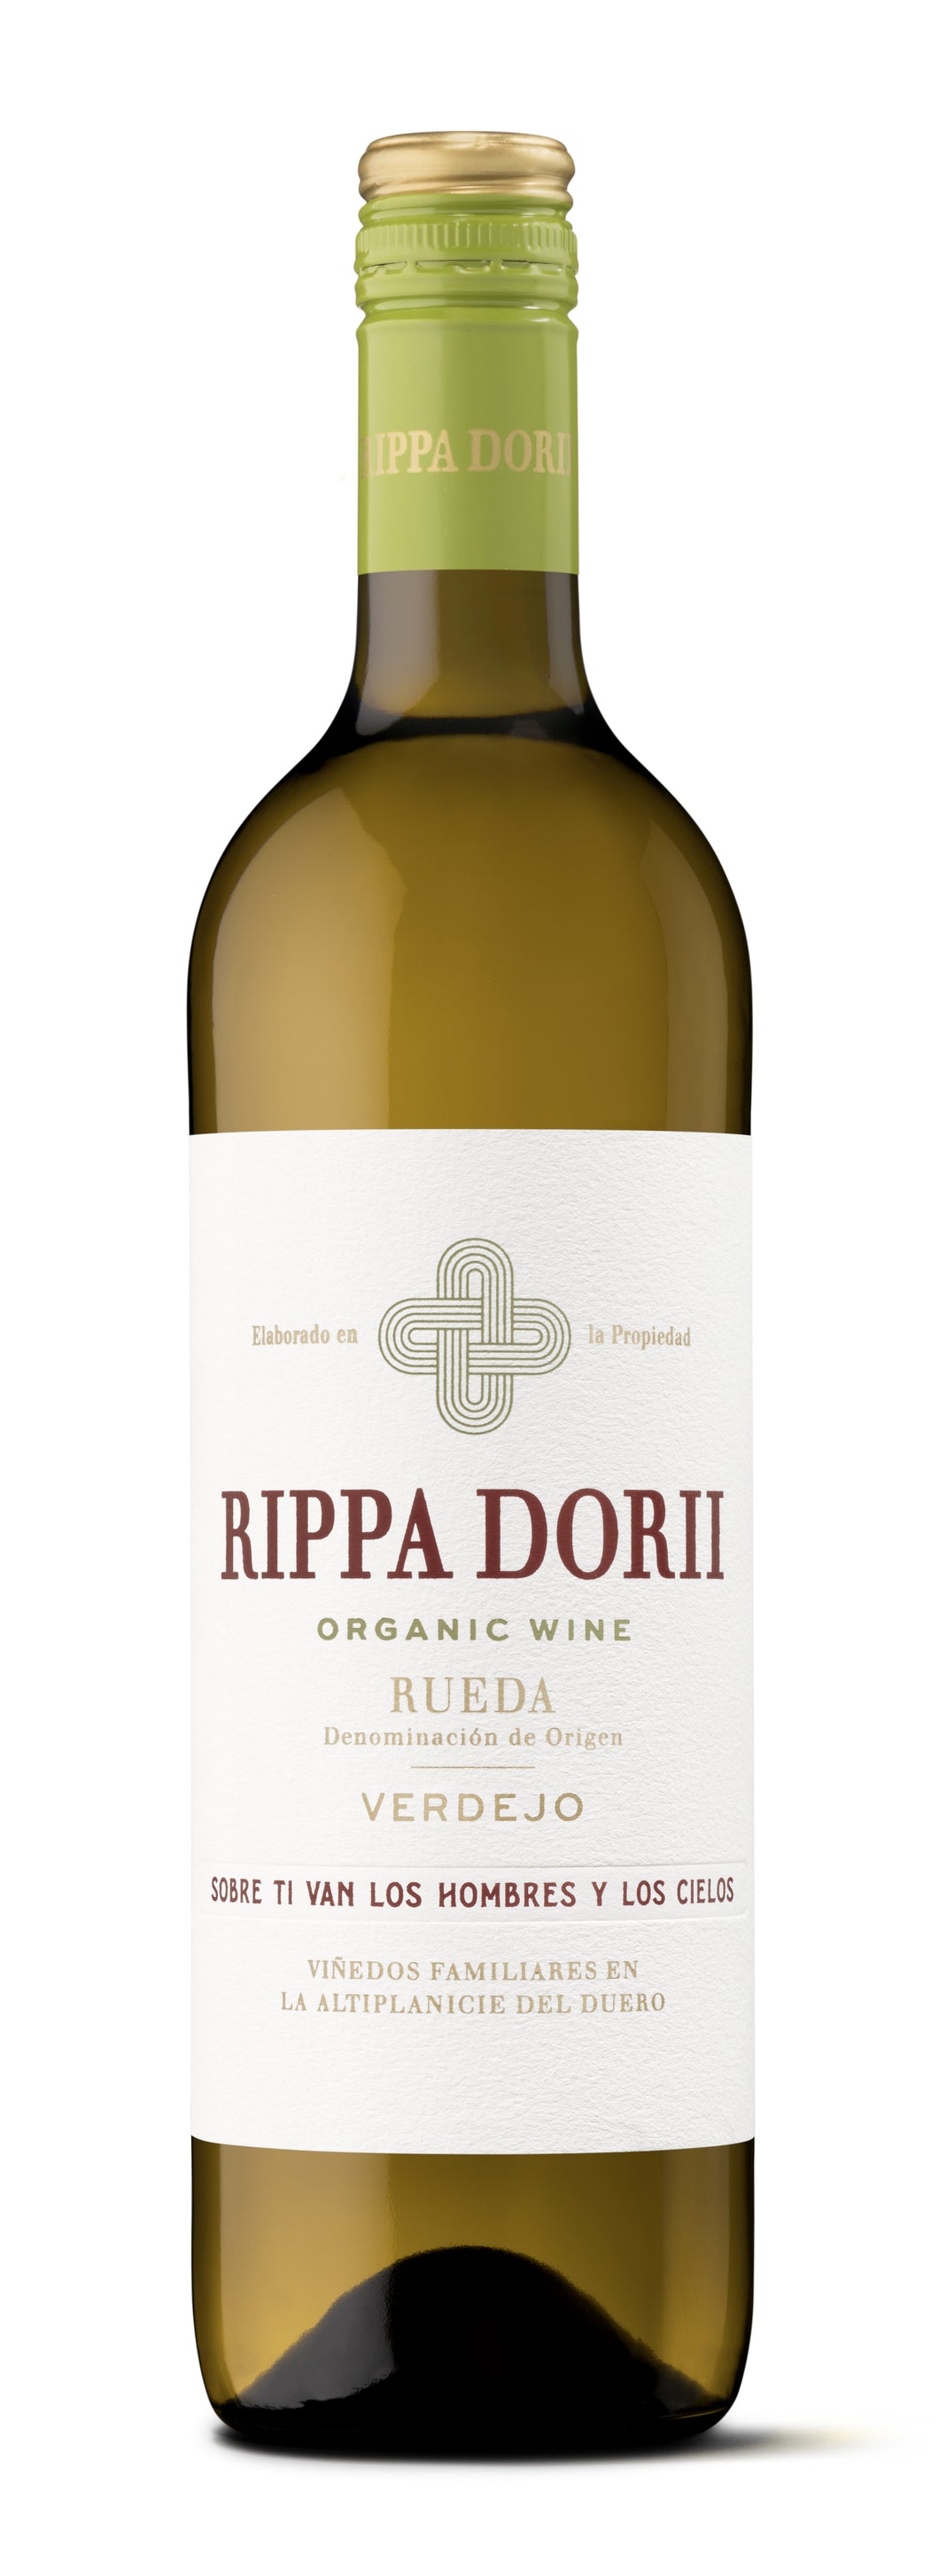 RIPPA DORII VERDEJO RUEDA - Vino Wines